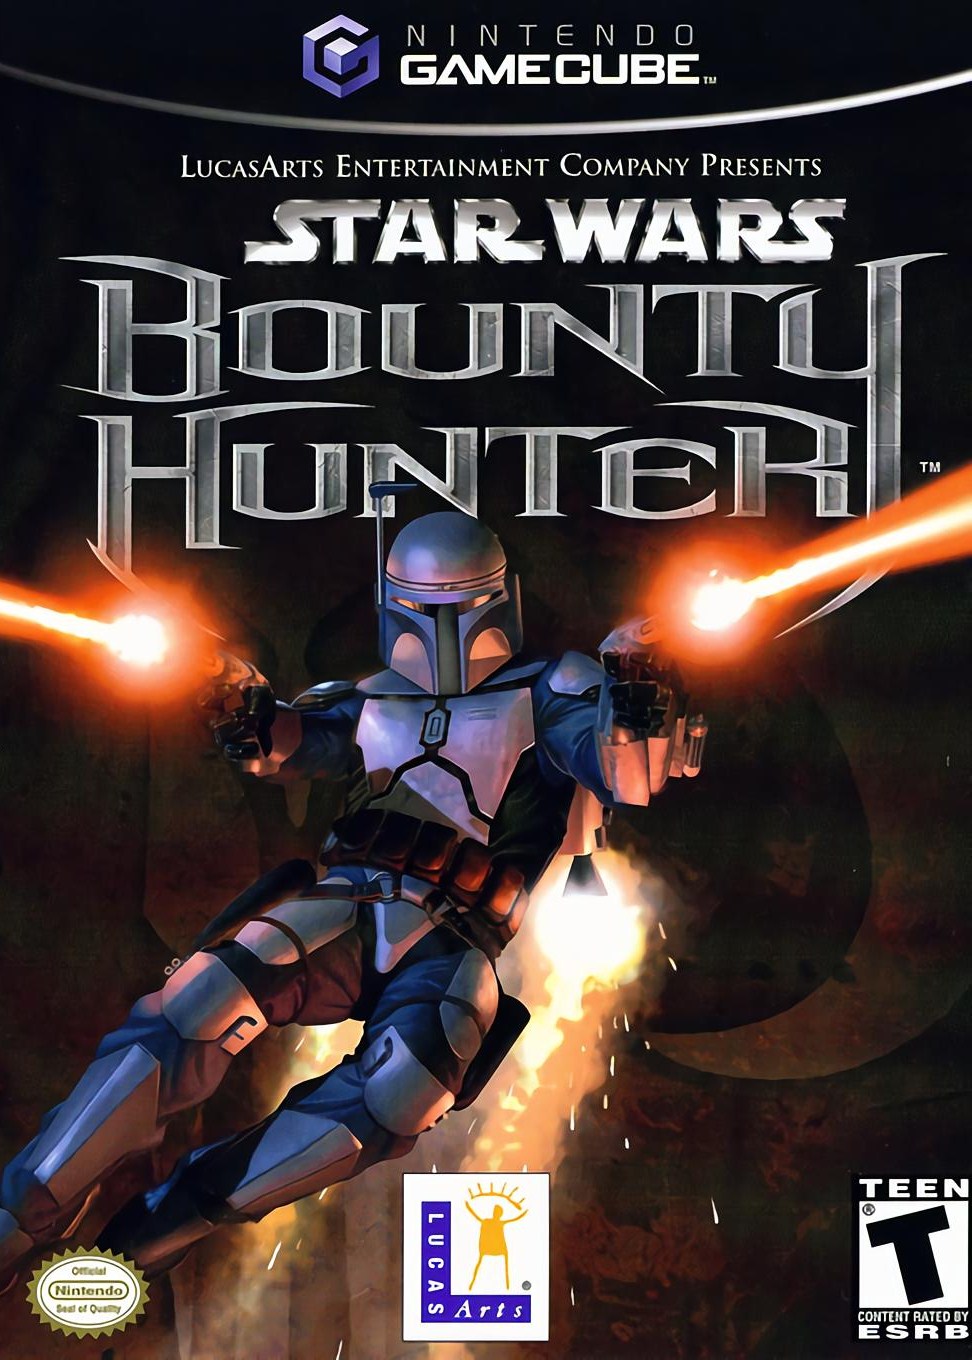 Star Wars: Bounty Hunter